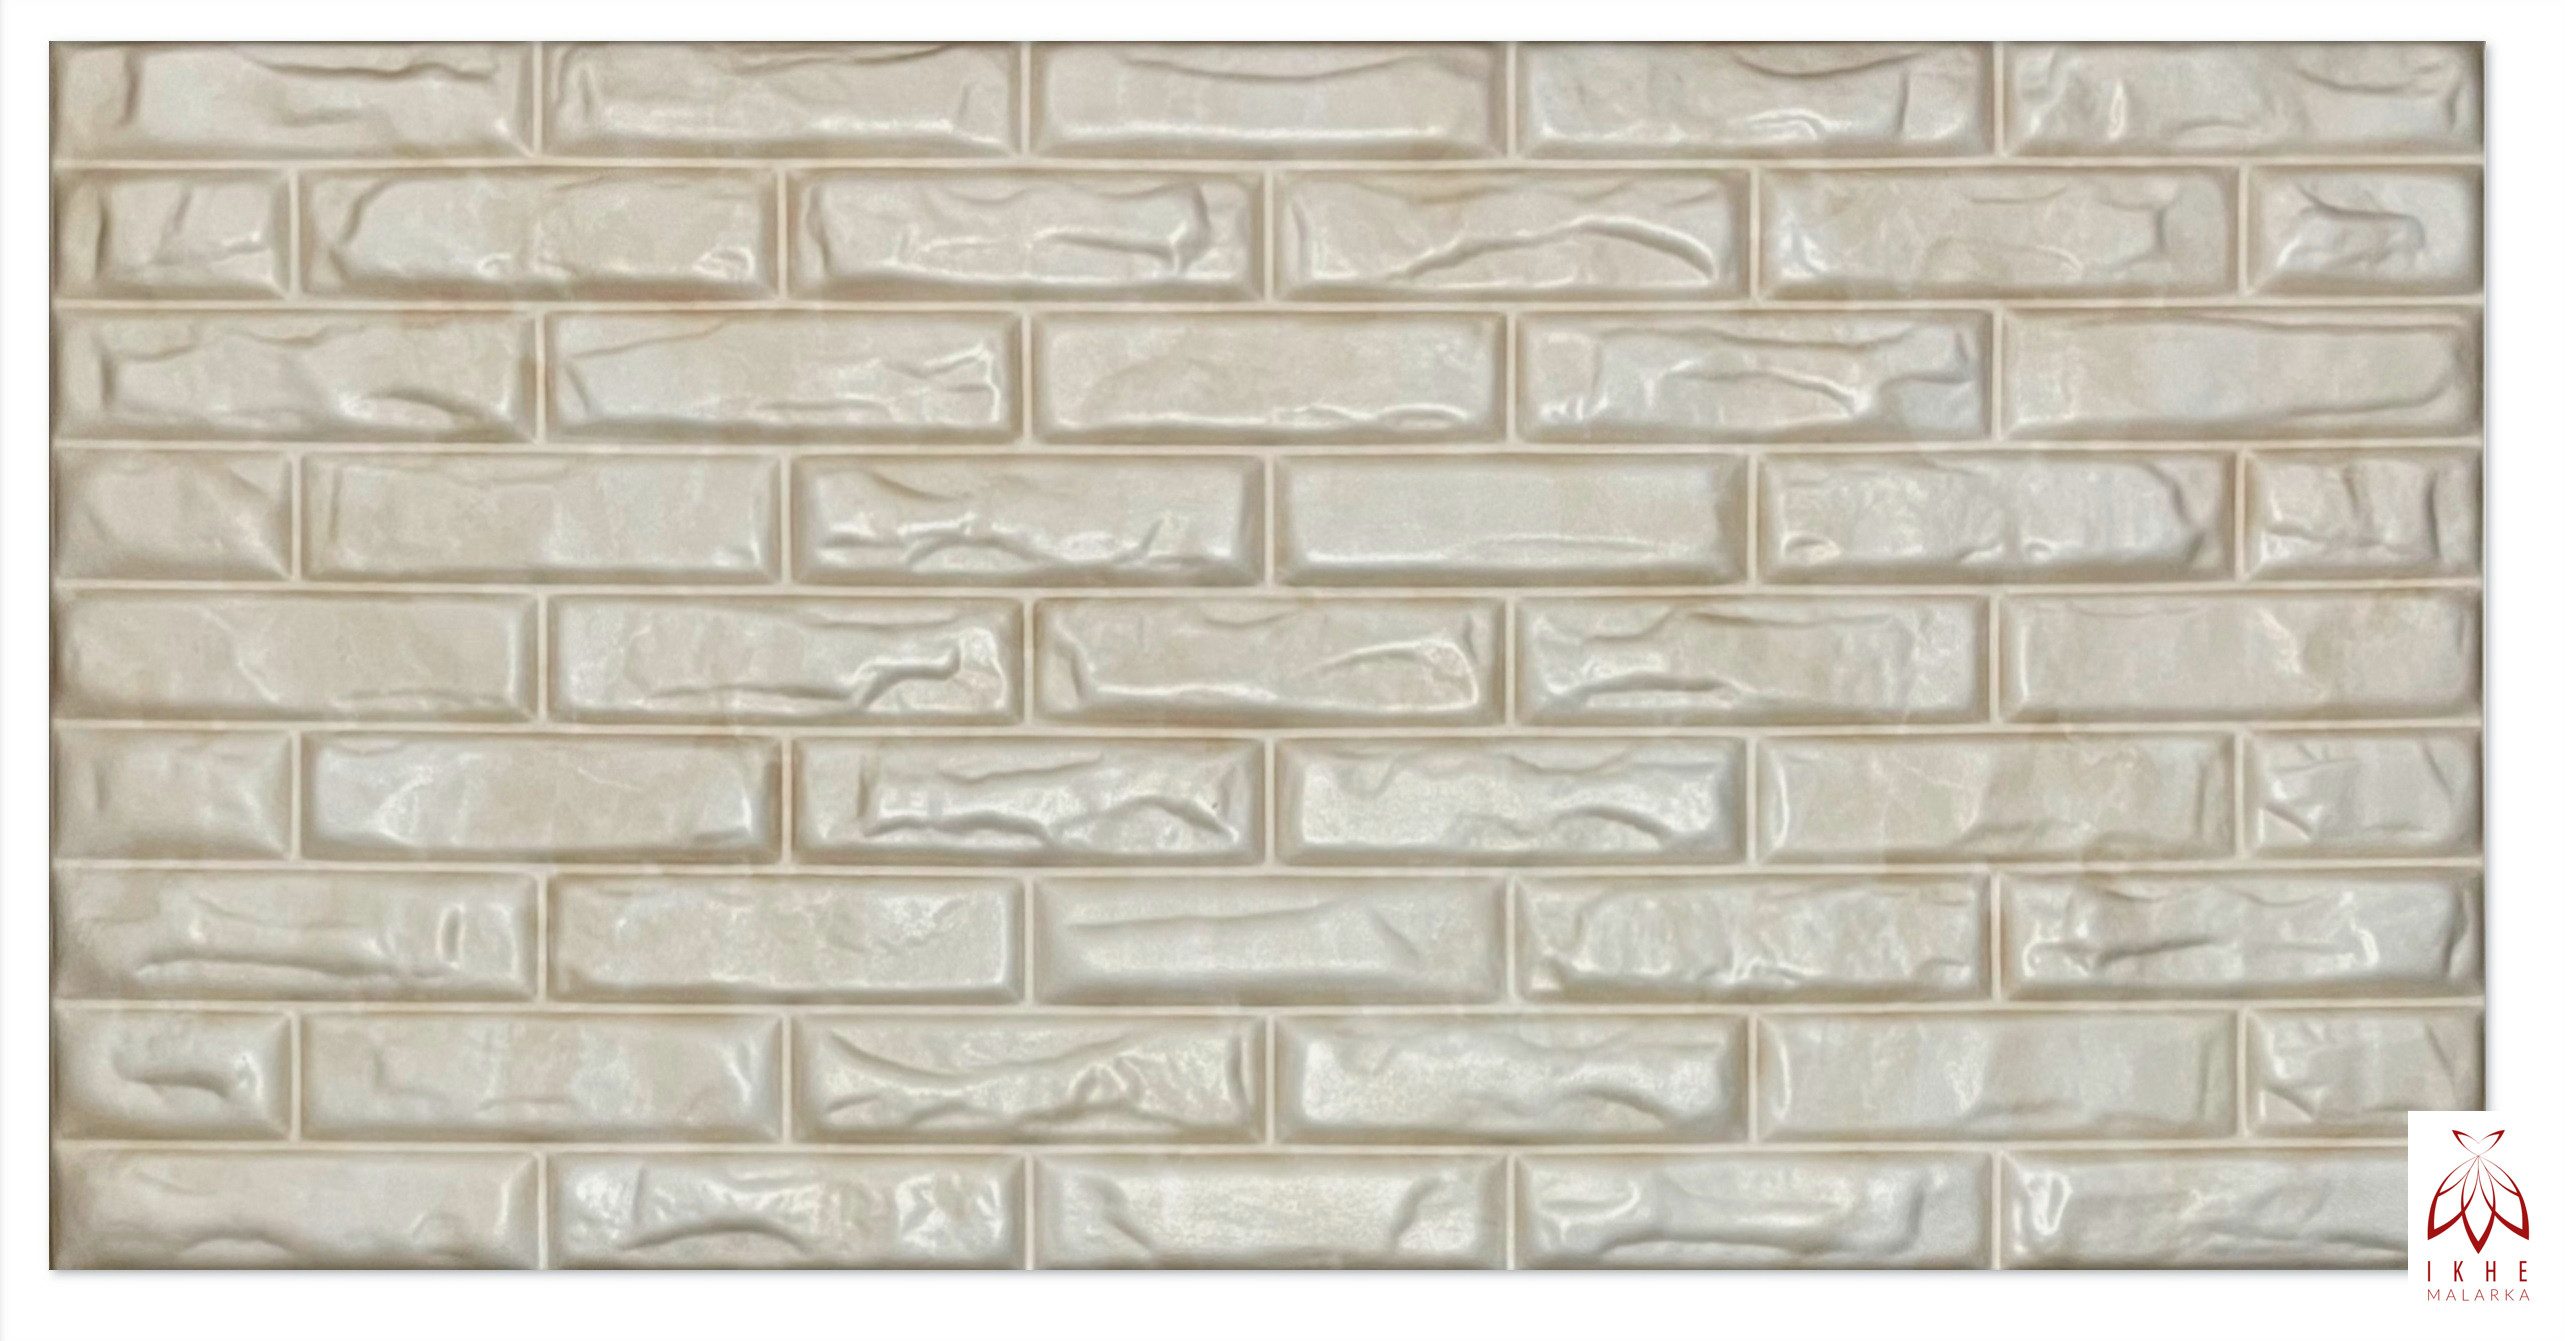 IKHEMalarka 3D Wandpaneel 4,10,16 Quadratmeter Polystyrol Deckenpaneele XL Brick, BxL: 50,00x100,00 cm, 0,50 qm, (32-tlg) Ziegeloptik Steinoptik Backstein Wandpaneele